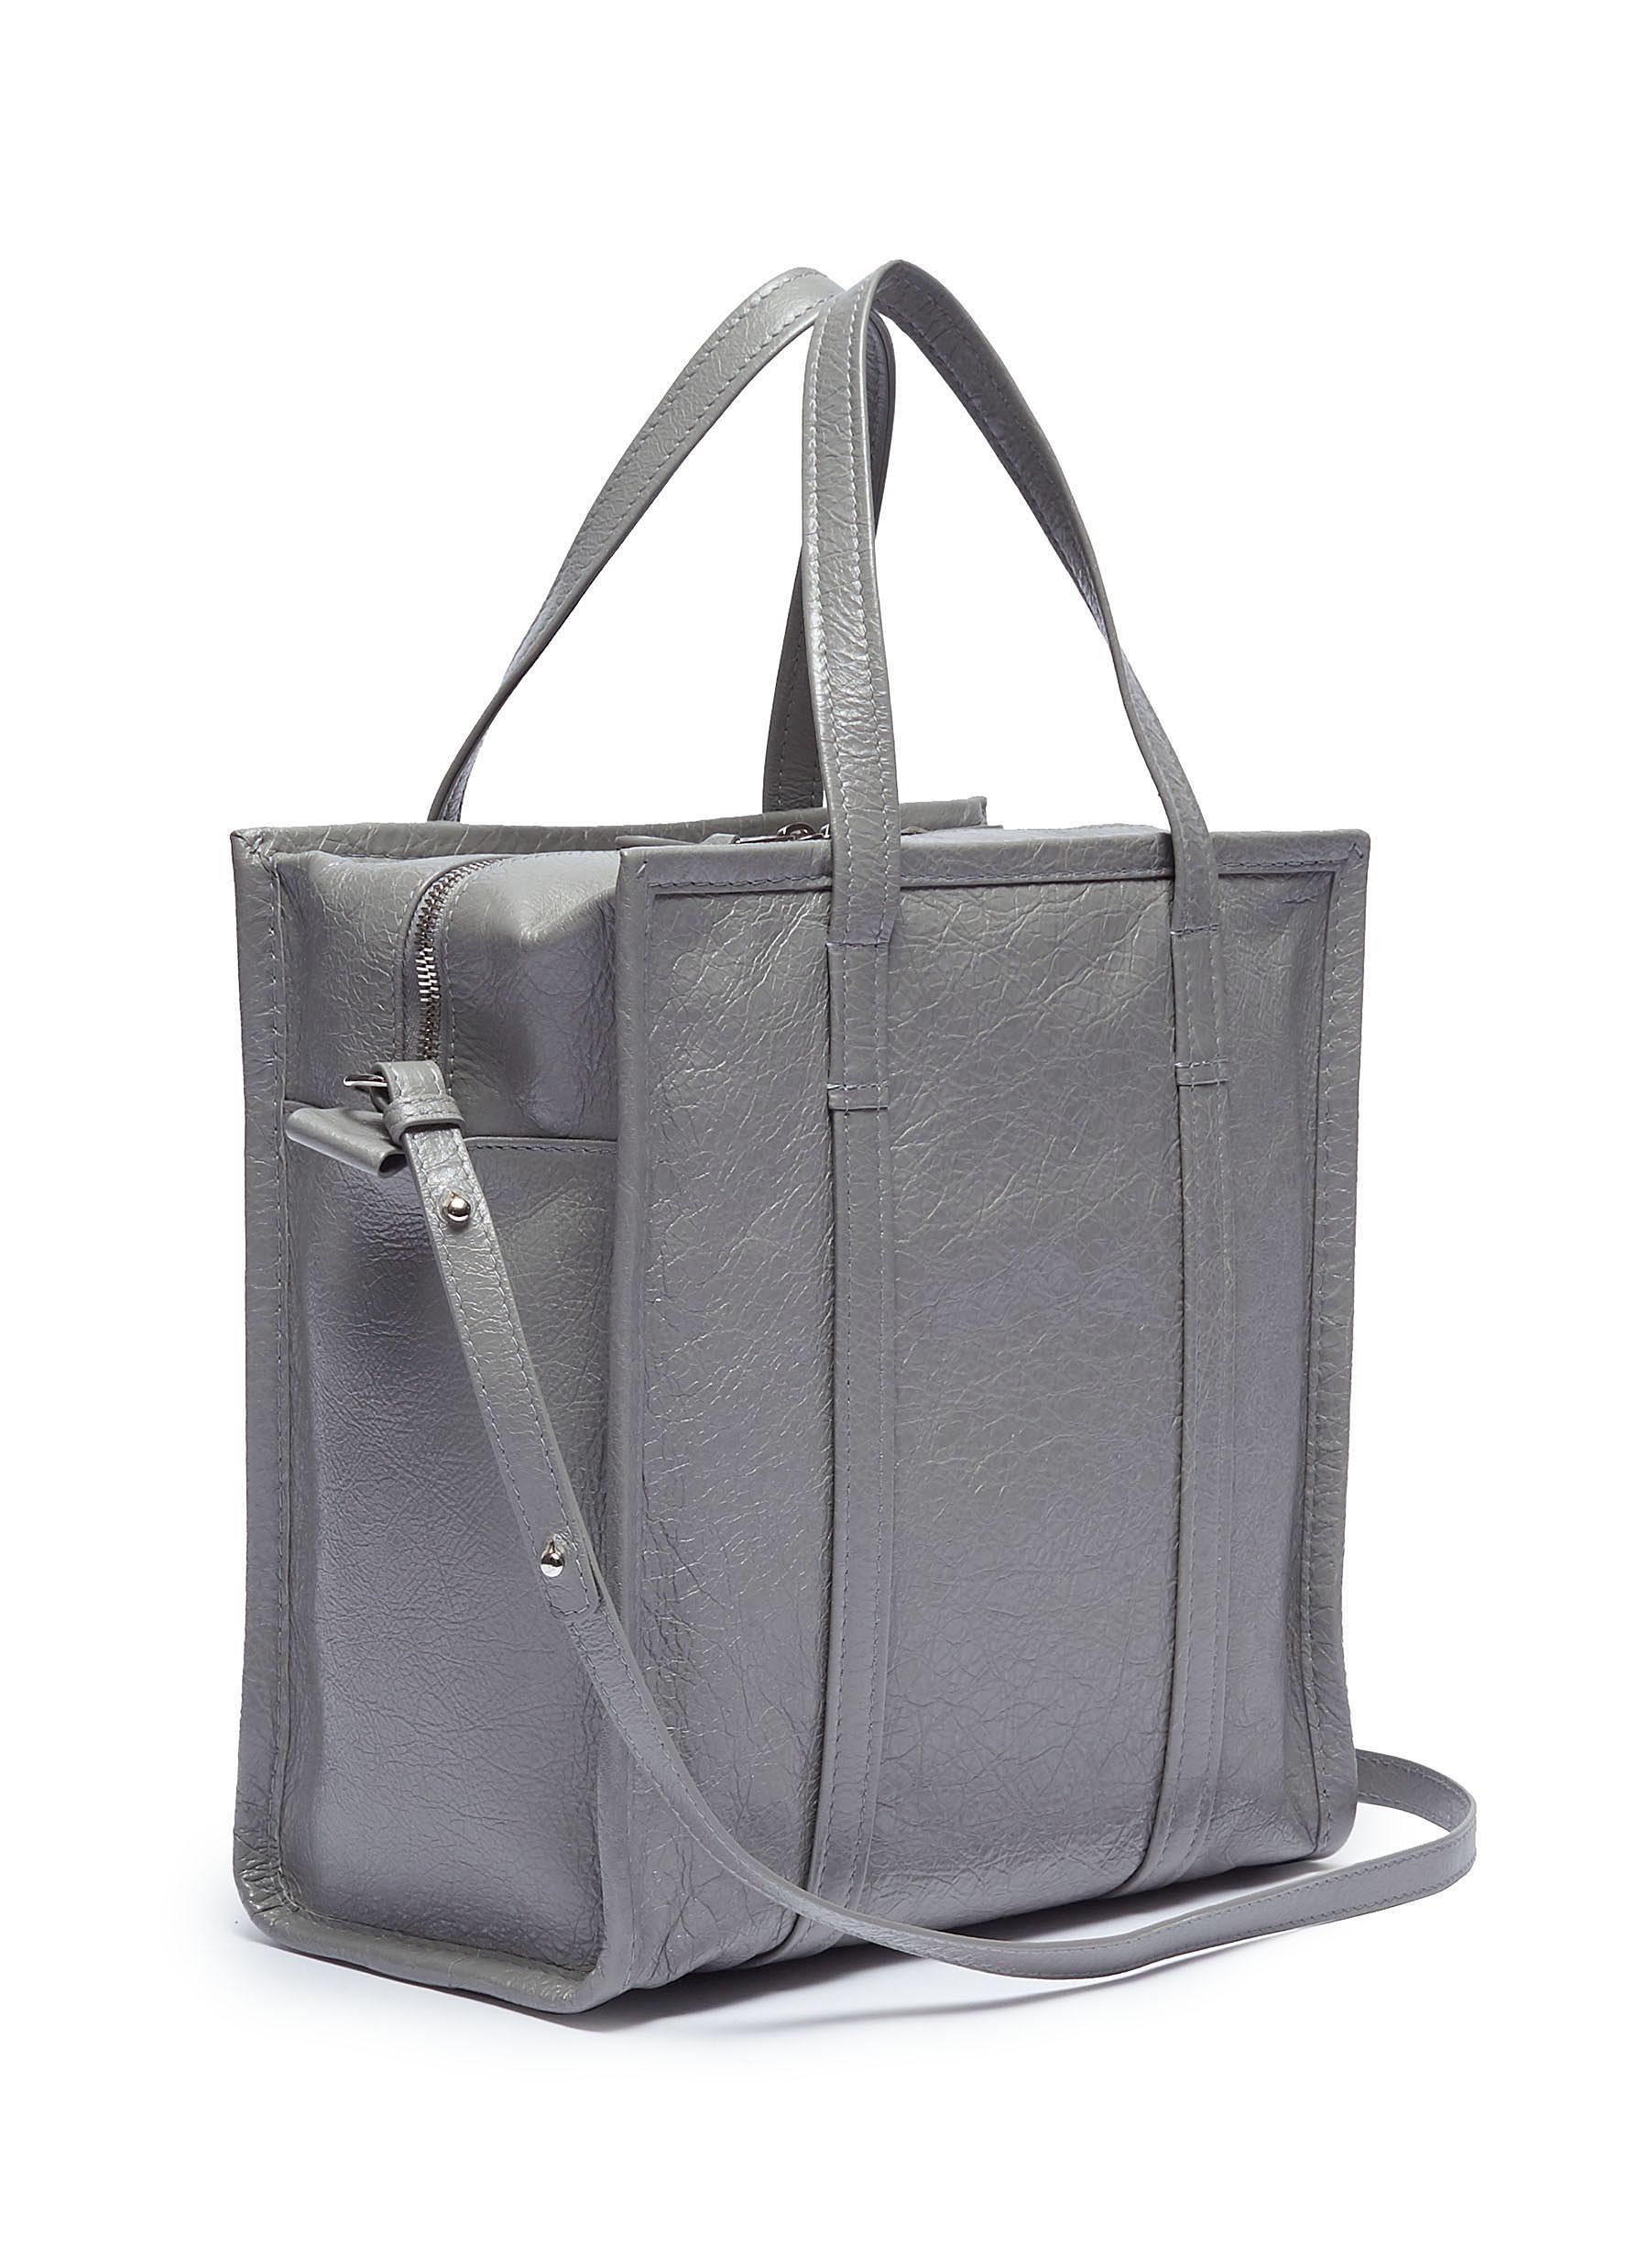 Balenciaga 'bazar Shopper' Small Leather Tote in Grey (Gray) | Lyst